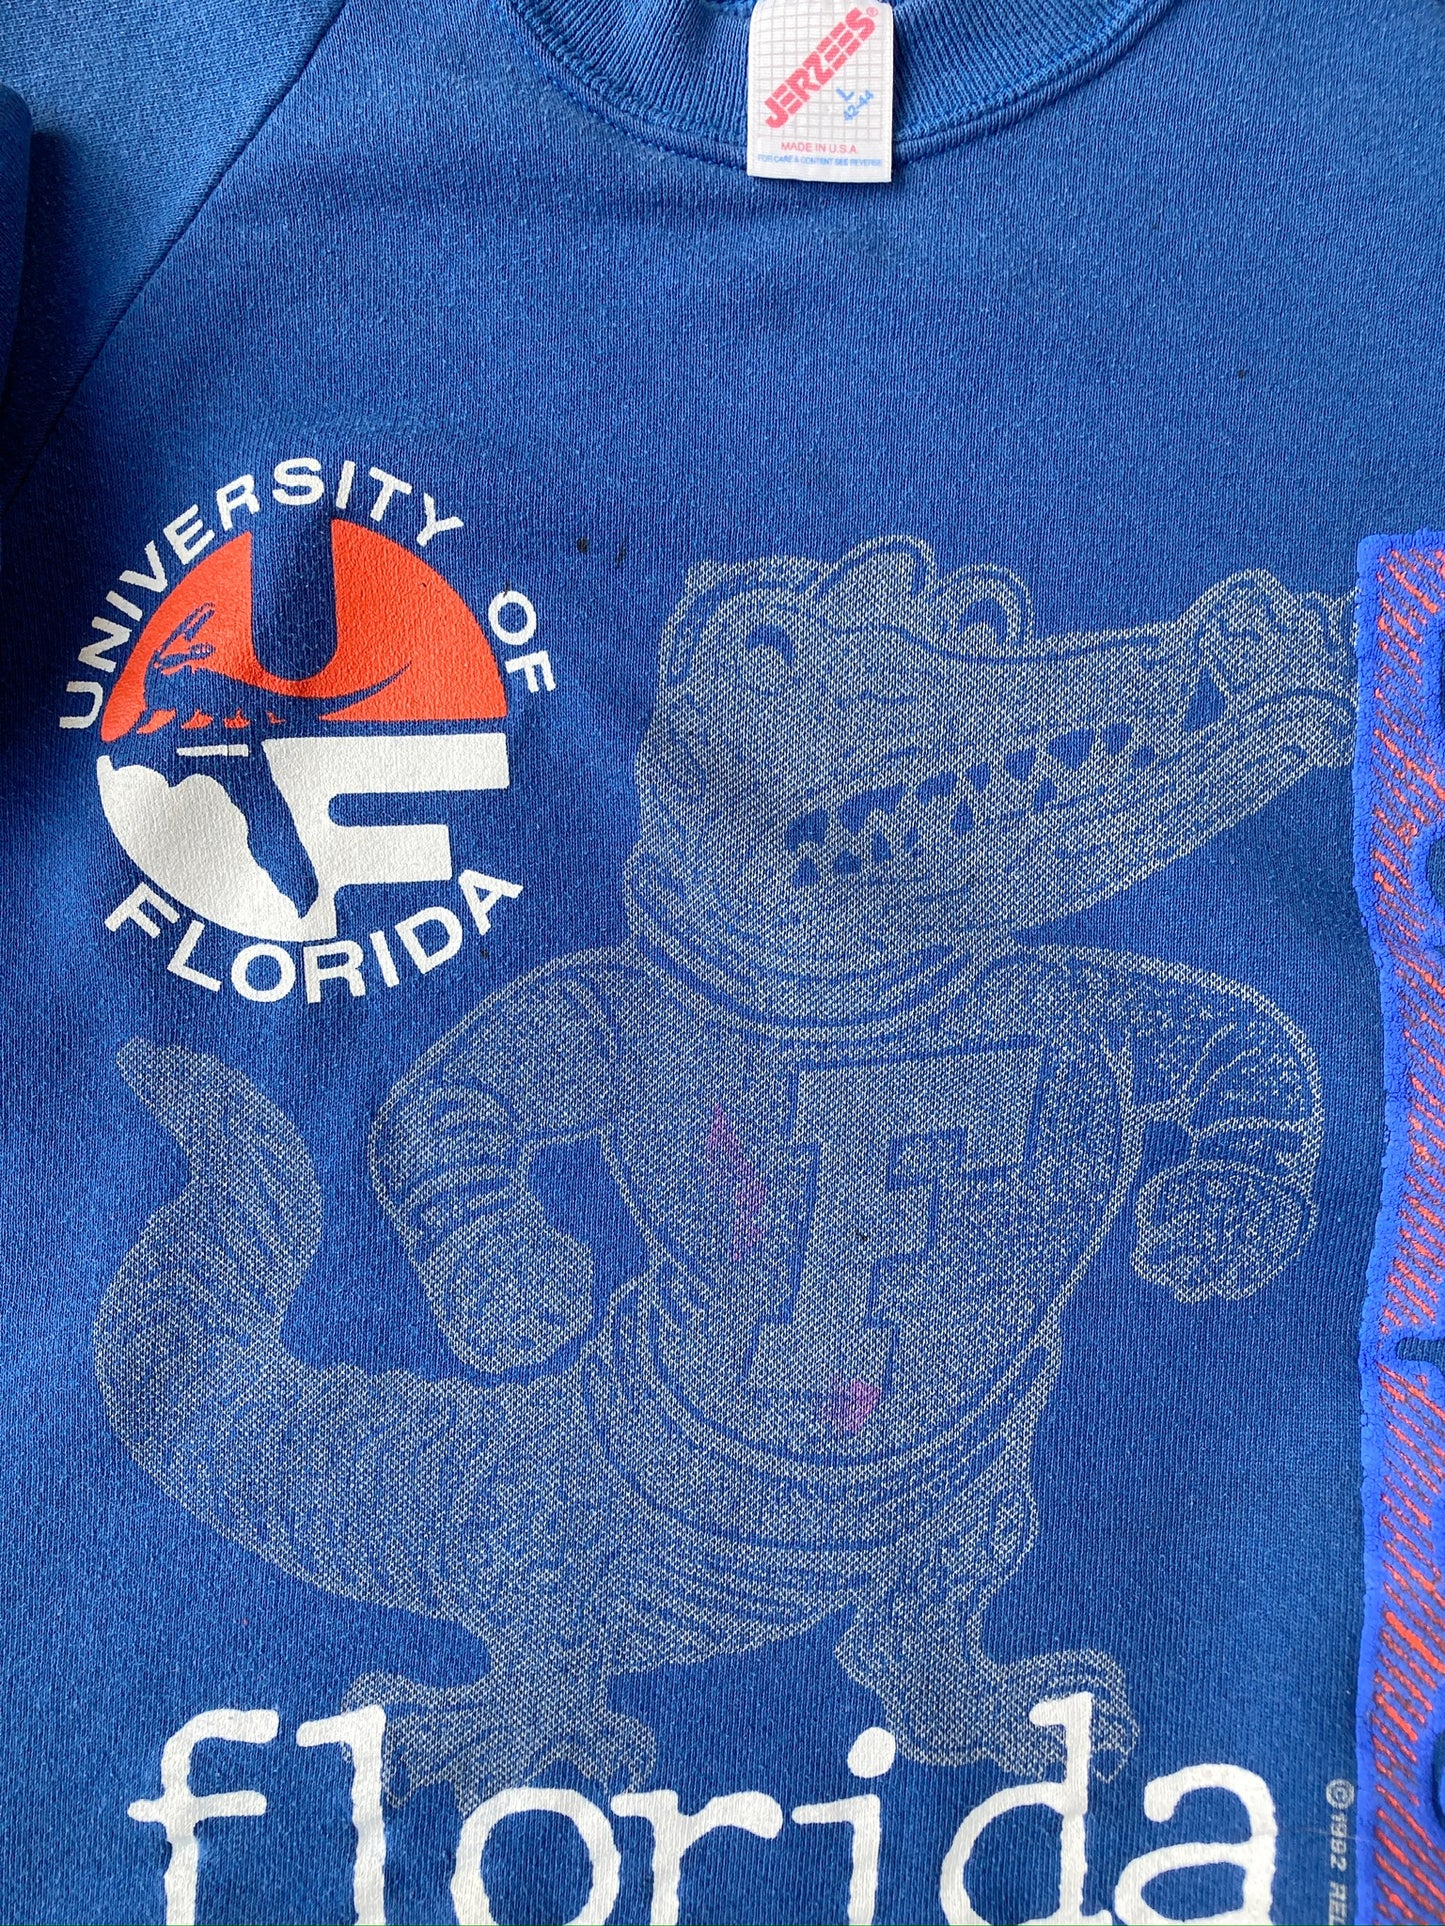 University of Florida Sweatshirt 80's - Medium